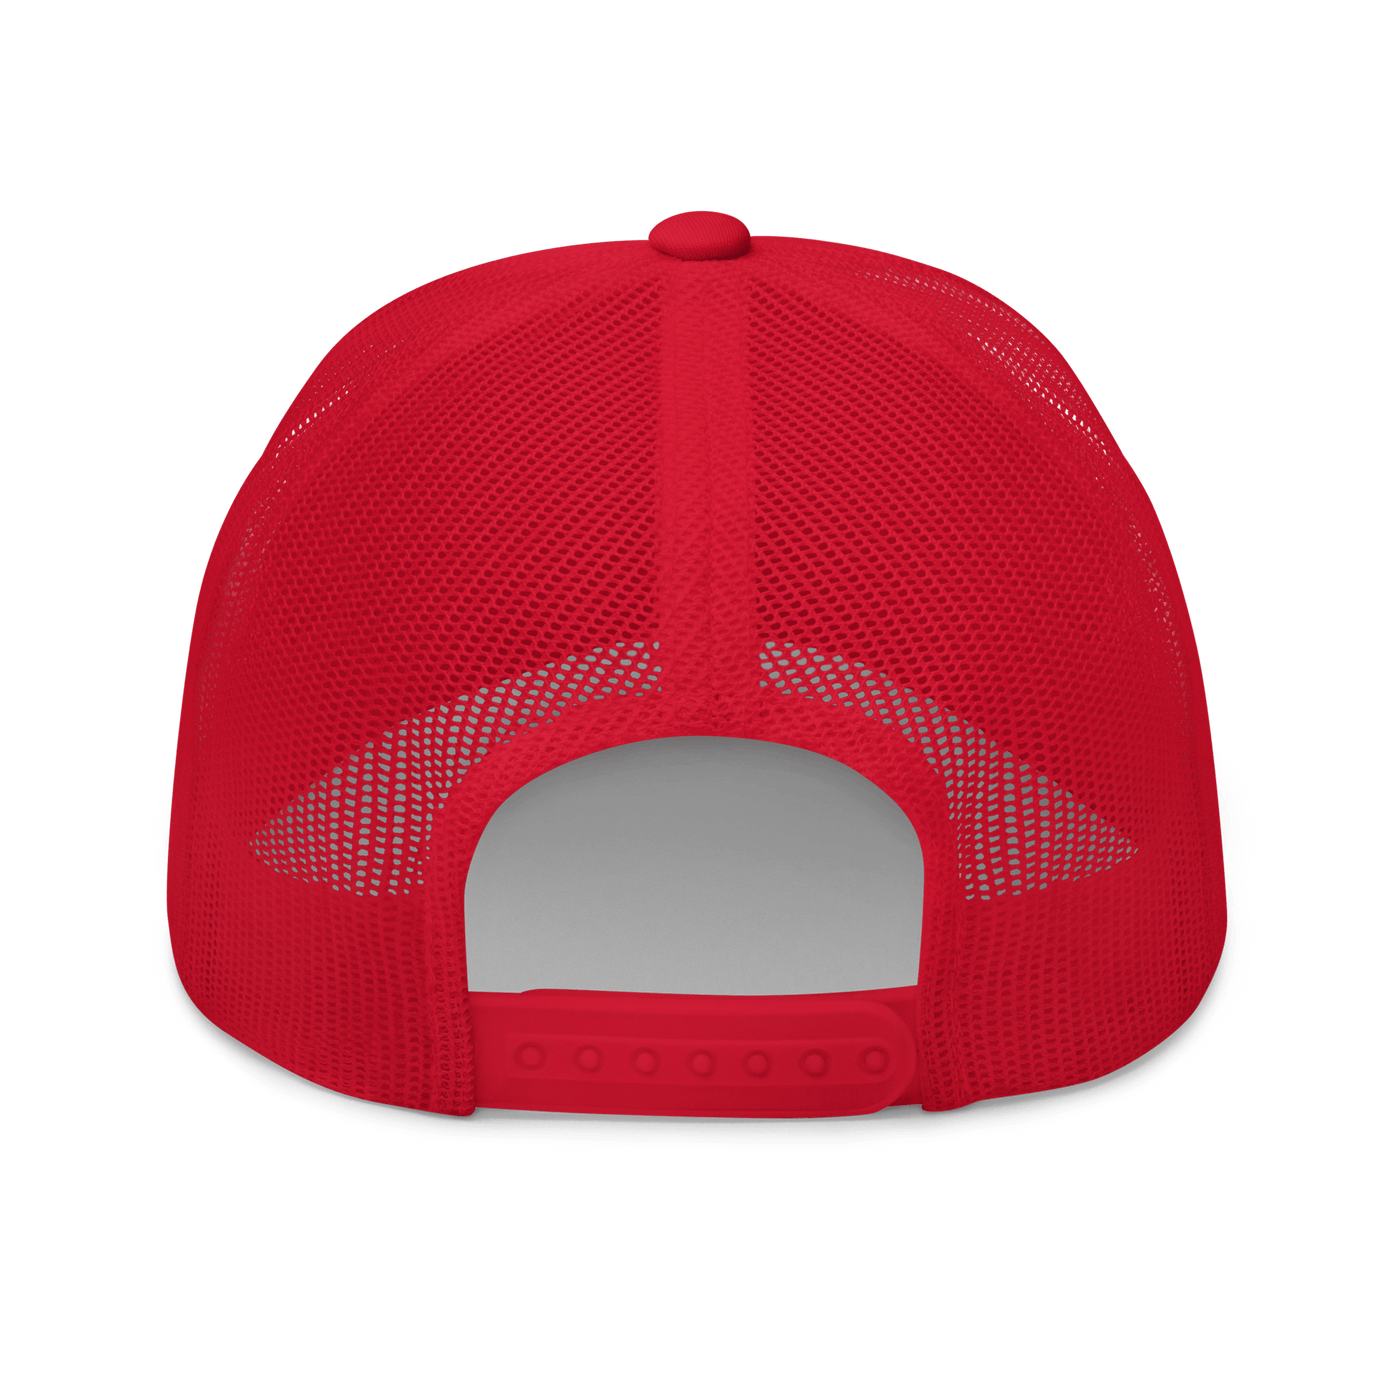 Ramen Bowl Trucker Cap - Red - - Just Another Cap Store